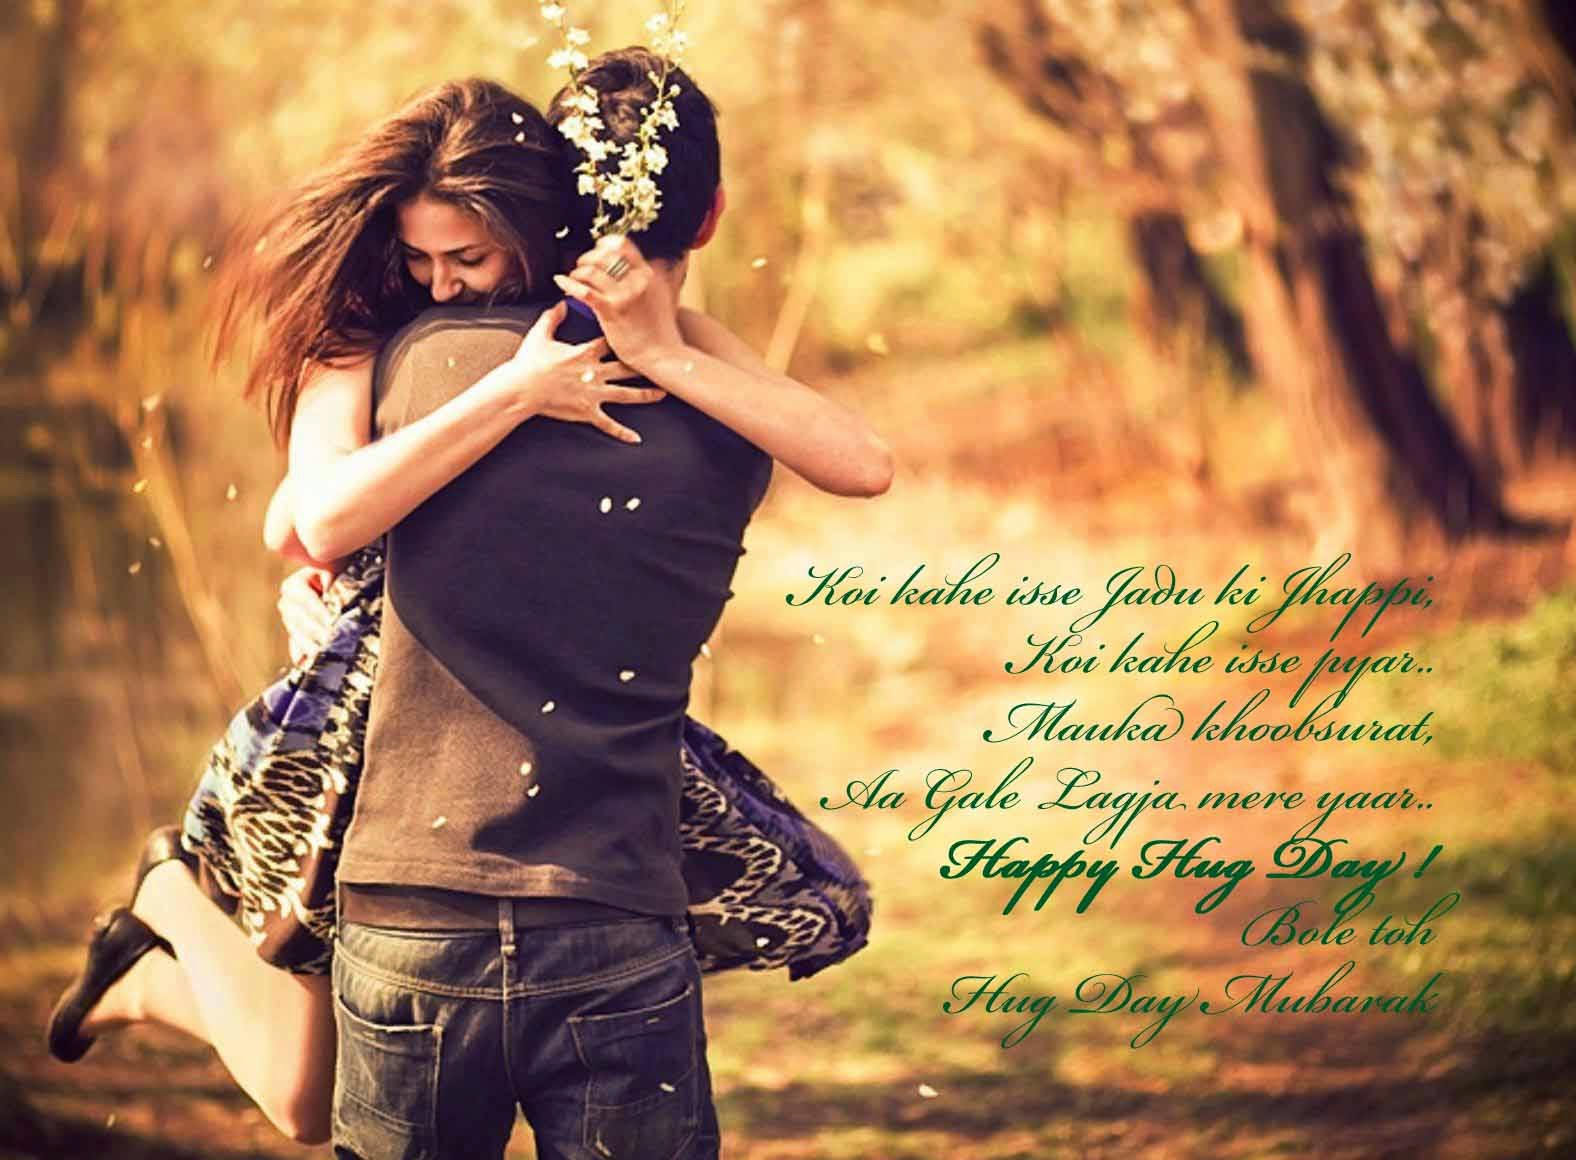 Happy Hug Day 2015 Best Hug Day Shayari Wallpaper - Couple Hug Each Other , HD Wallpaper & Backgrounds